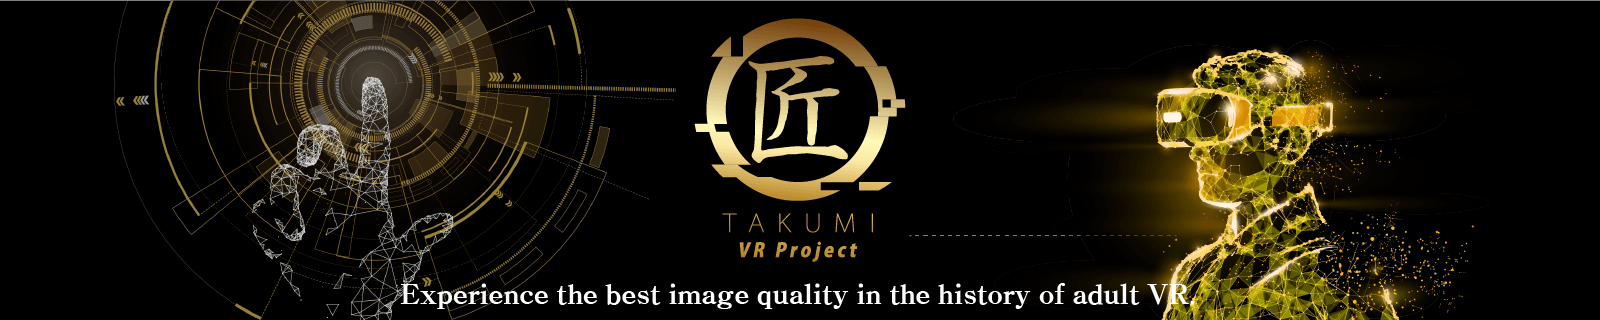 Takumiシリーズ - アダルトVR史上最高の画質プロジェクト